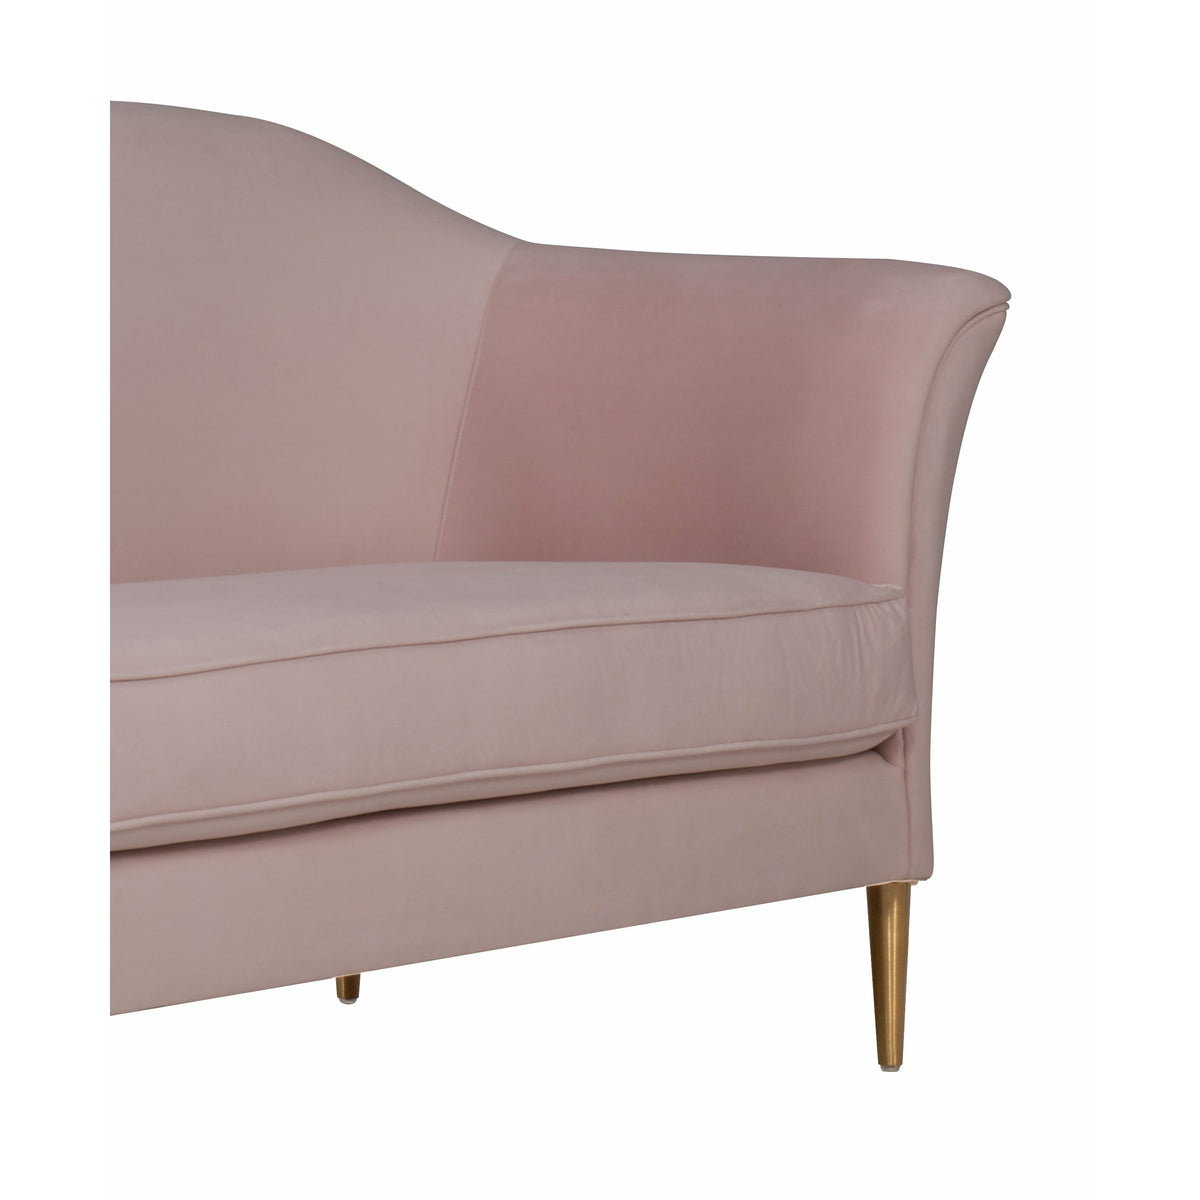 Plato Blush Velvet Sofa - Be Bold Furniture